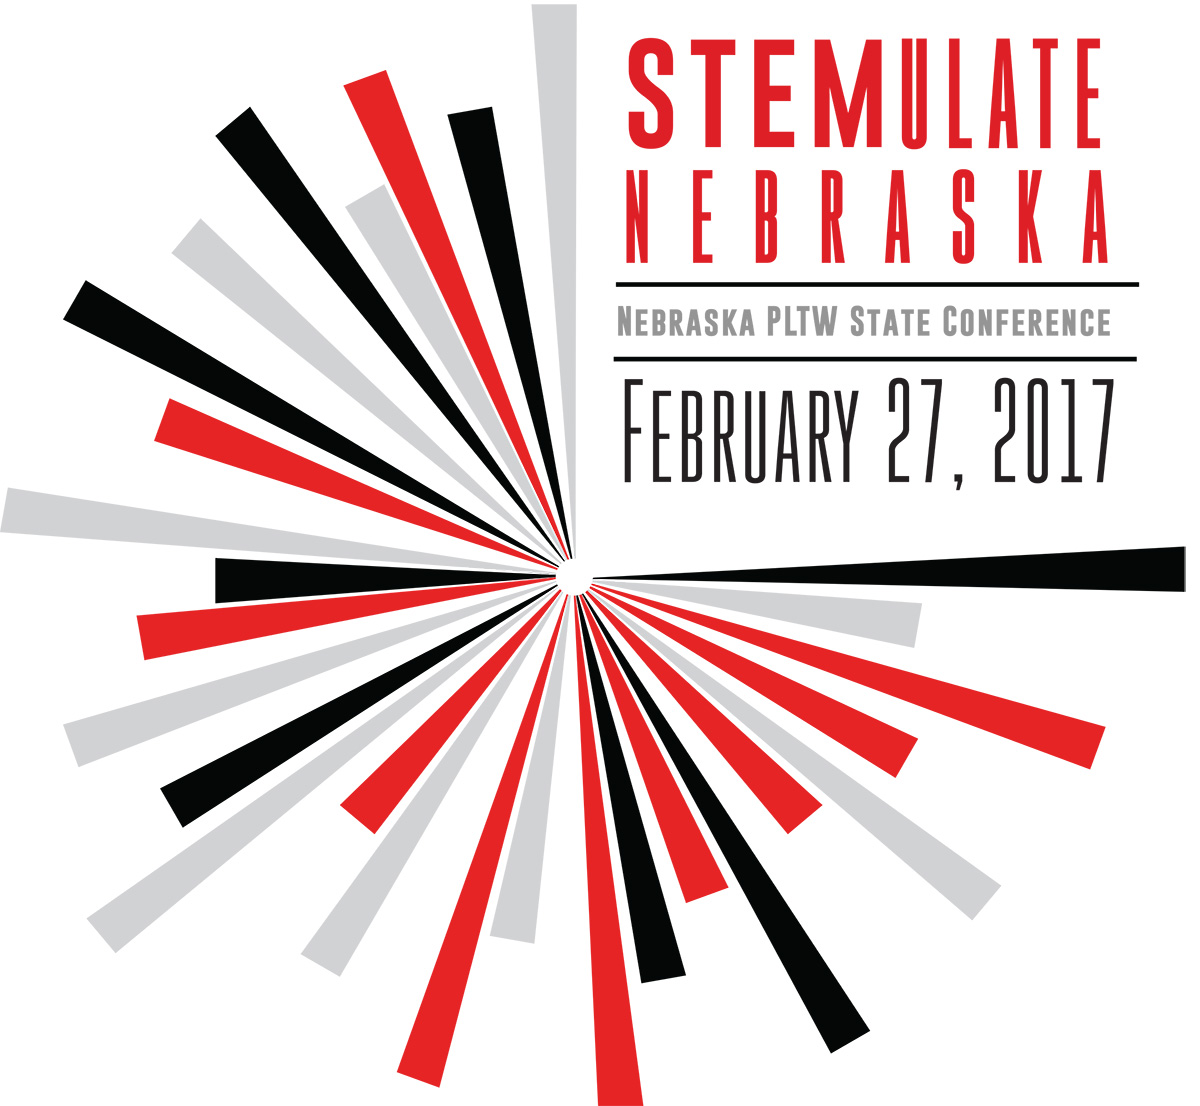 STEMulate Nebraska: Nebraska PLTW State Conference. February 27, 2017